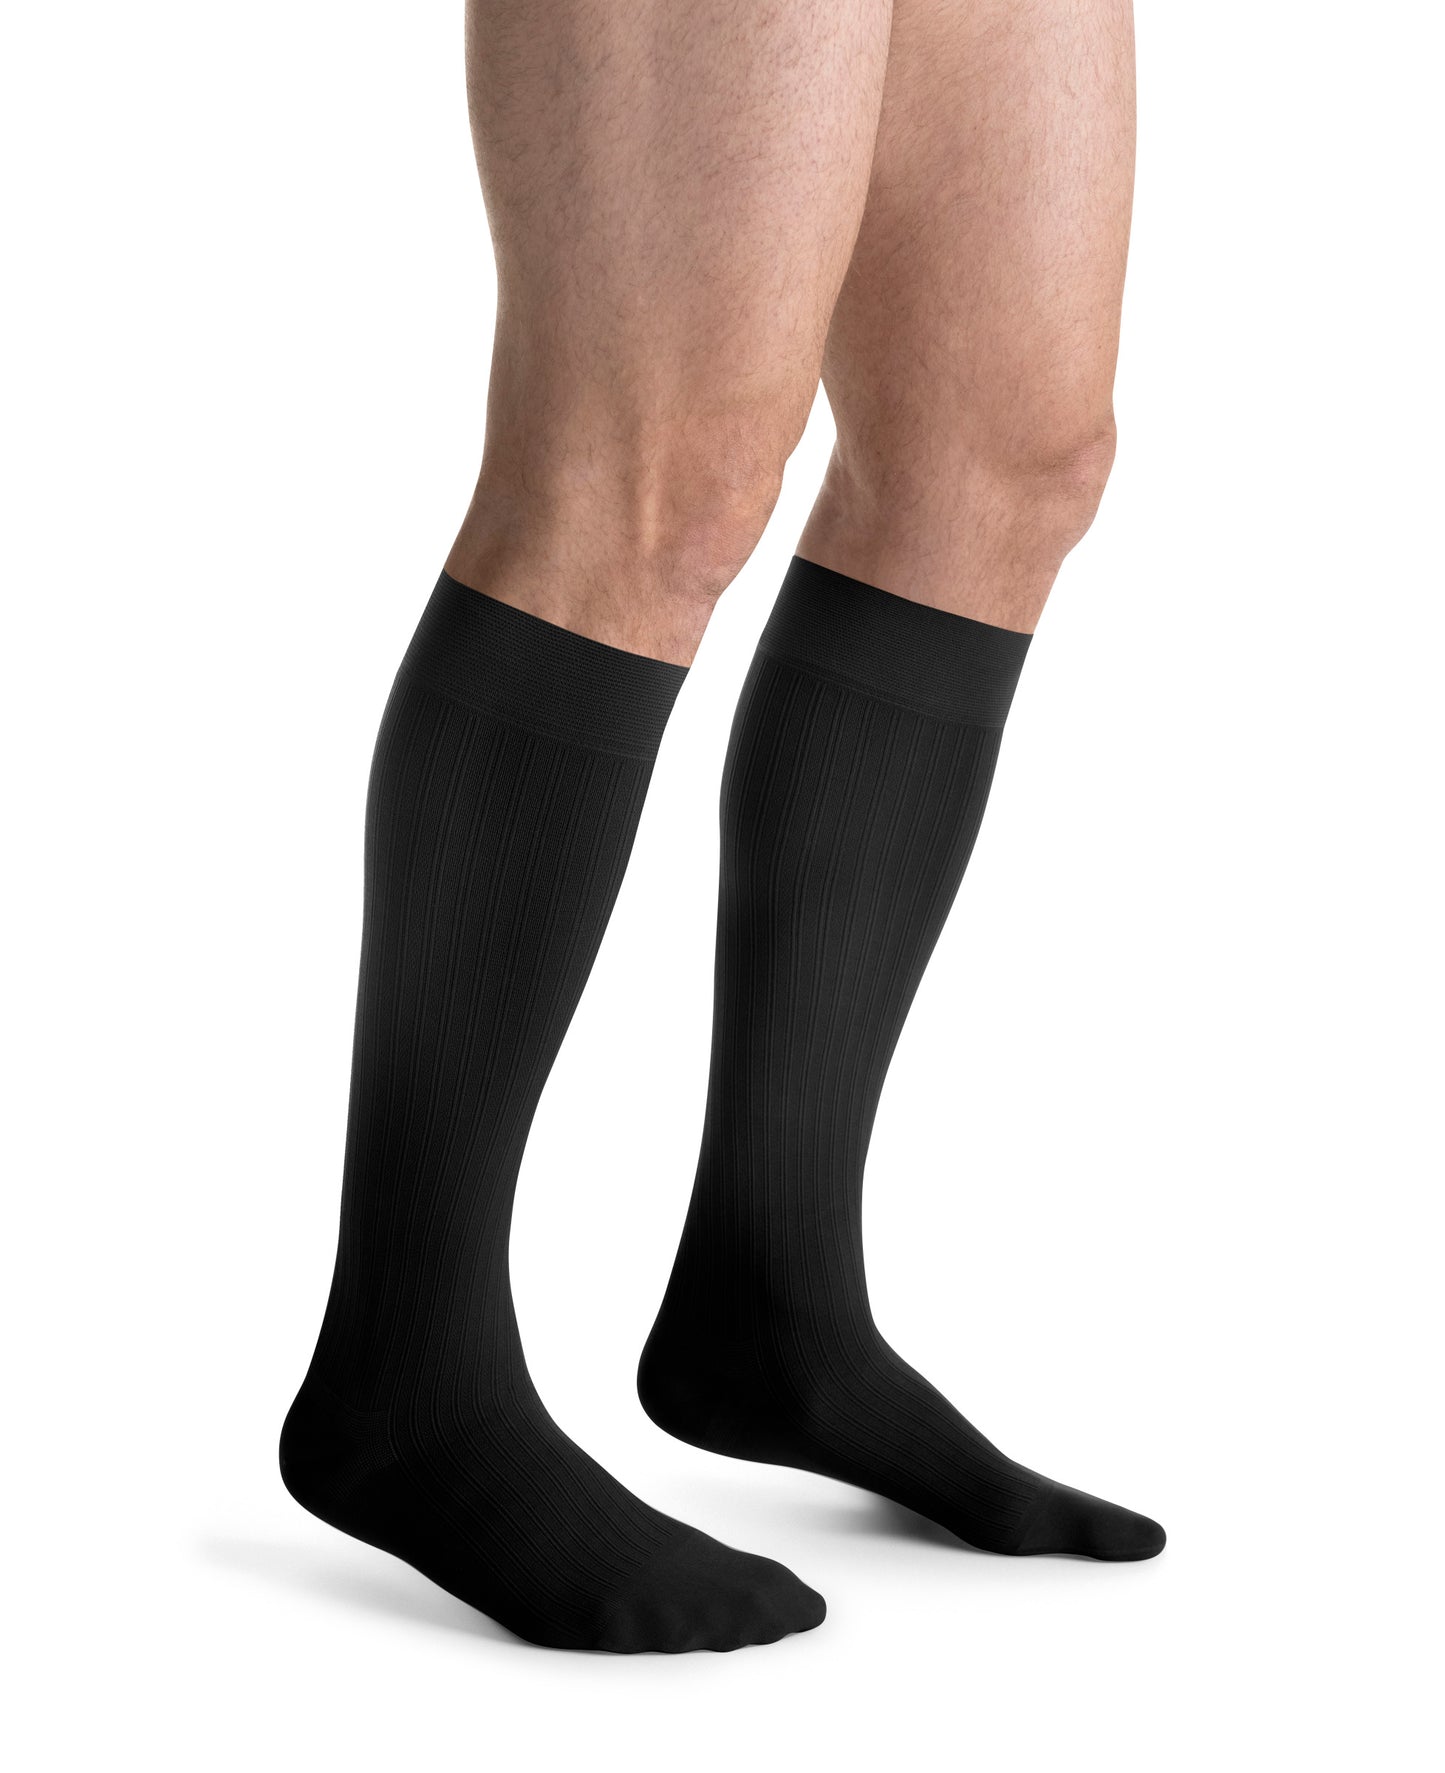 JOBST forMen Ambition Compression Socks 30-40 mmHg Knee High SoftFit Band Closed Toe